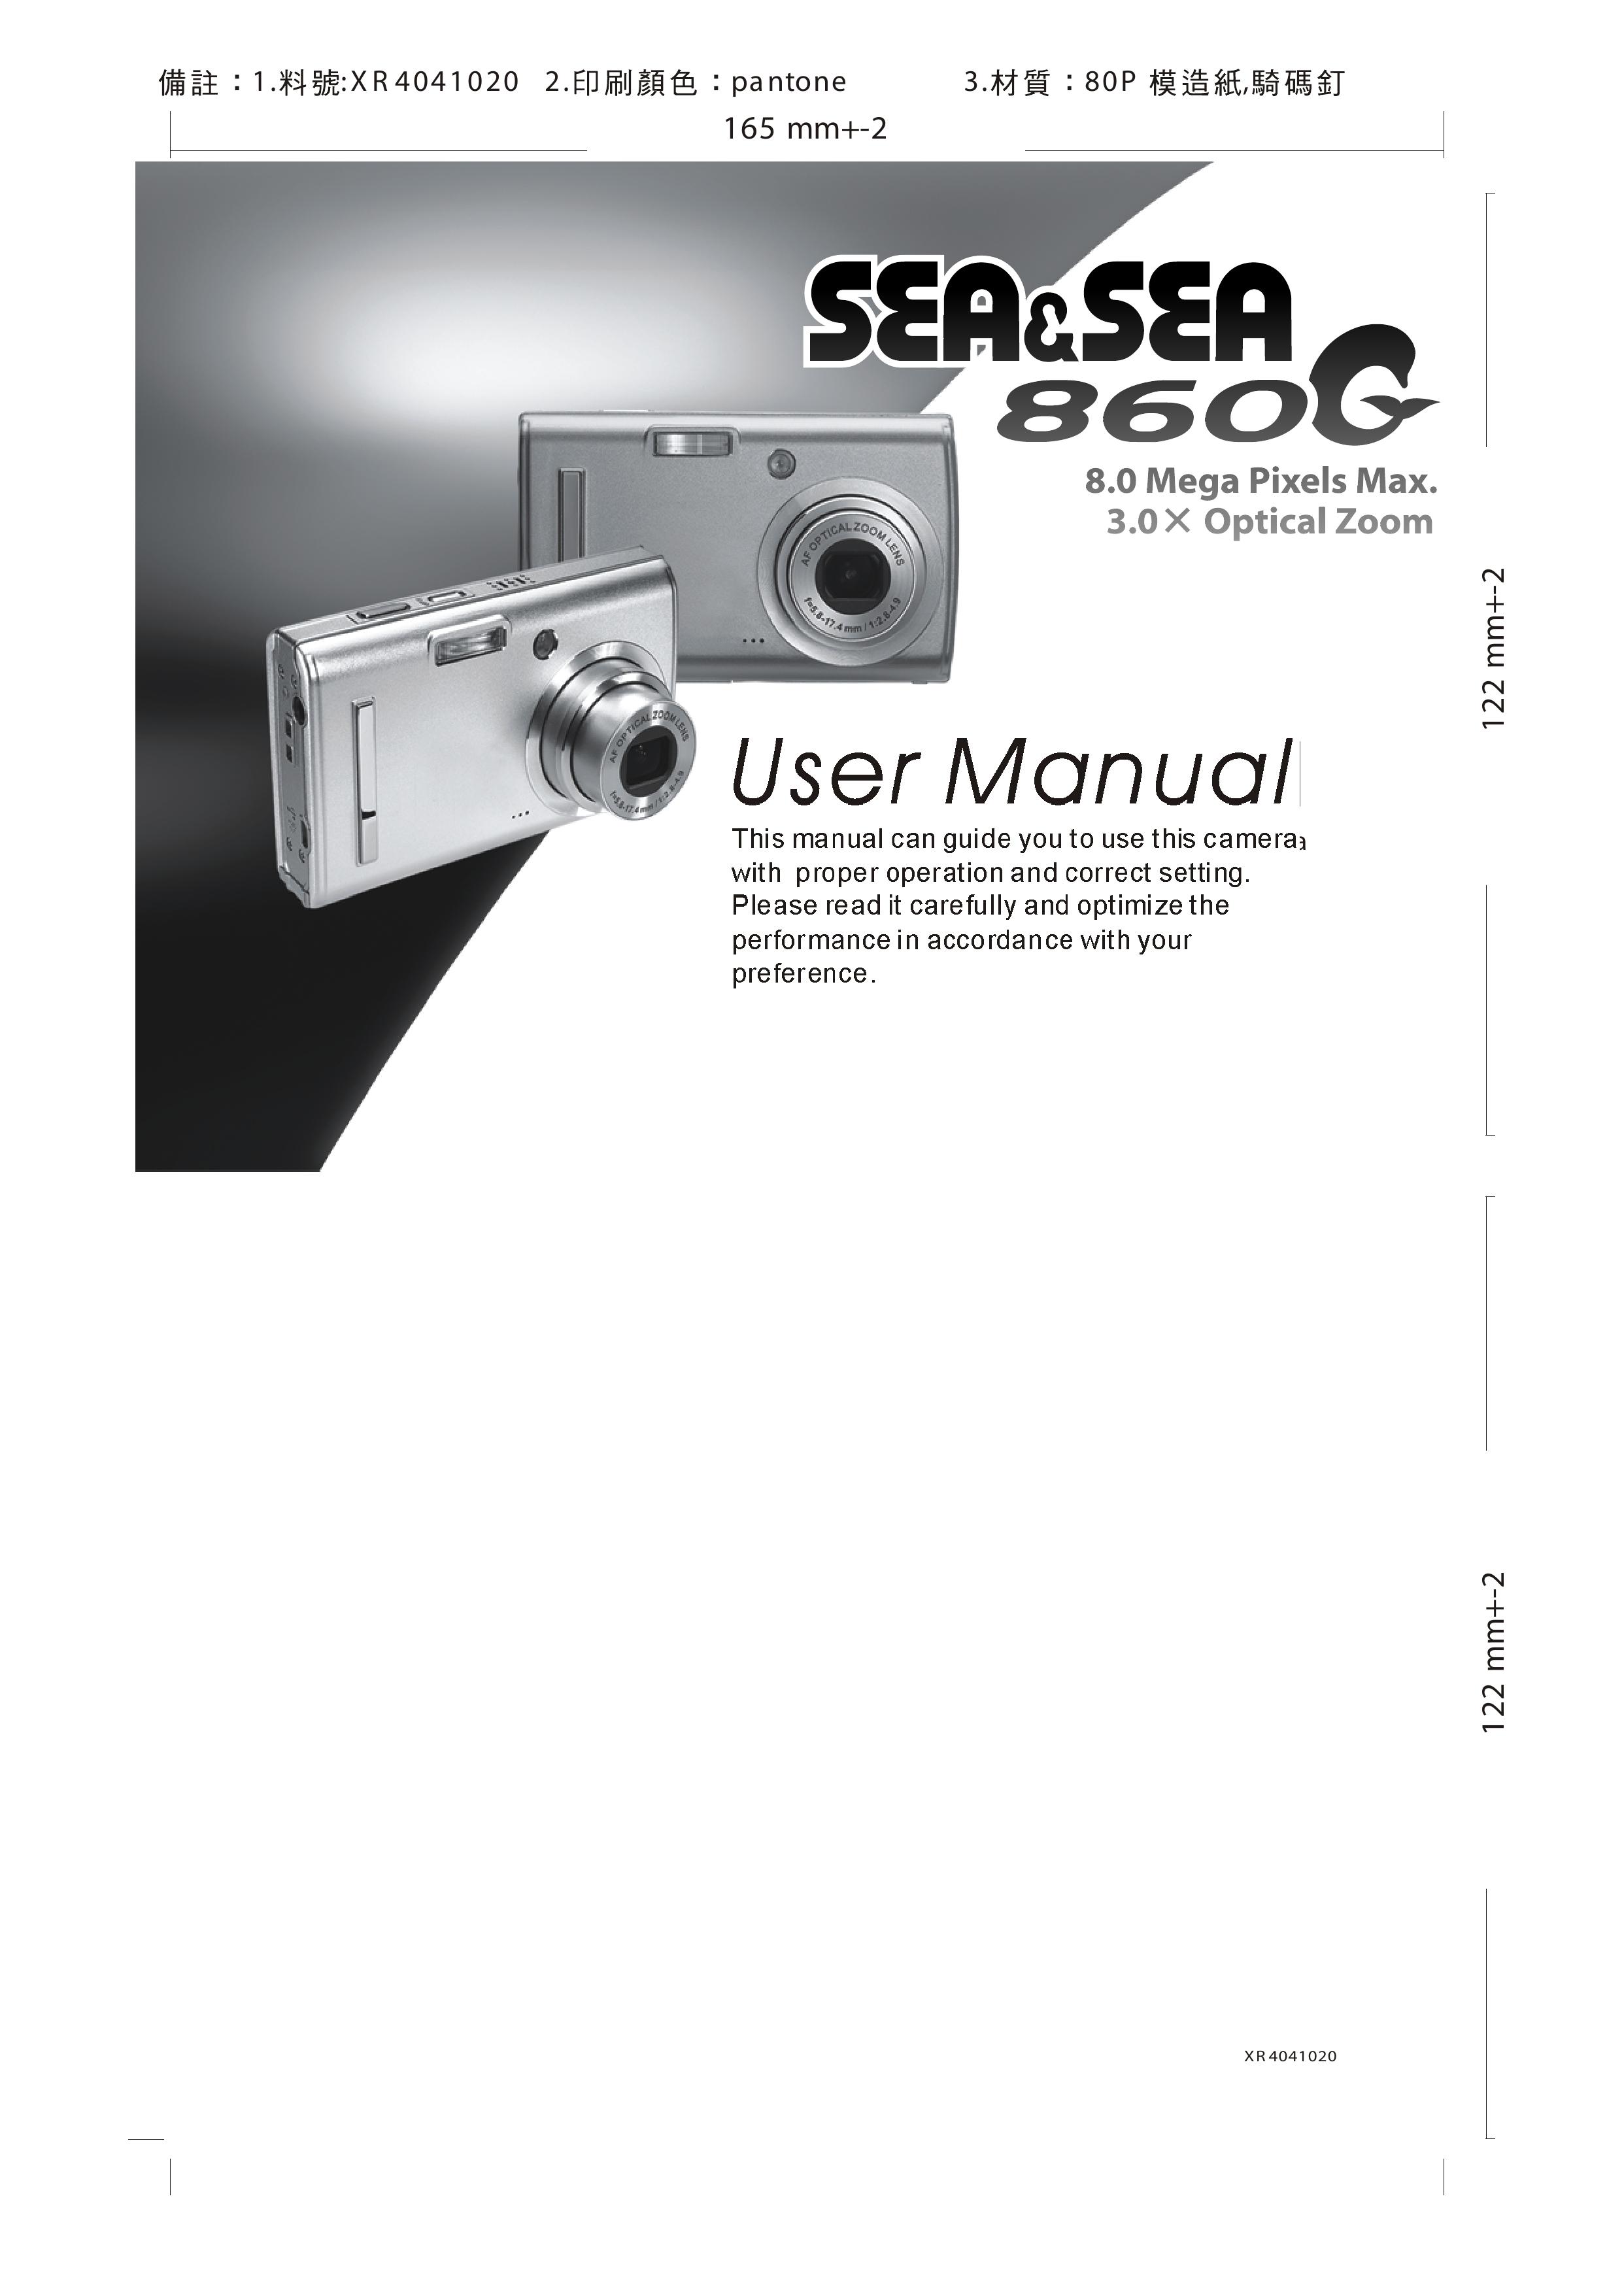 Sea & Sea 860G Digital Camera User Manual